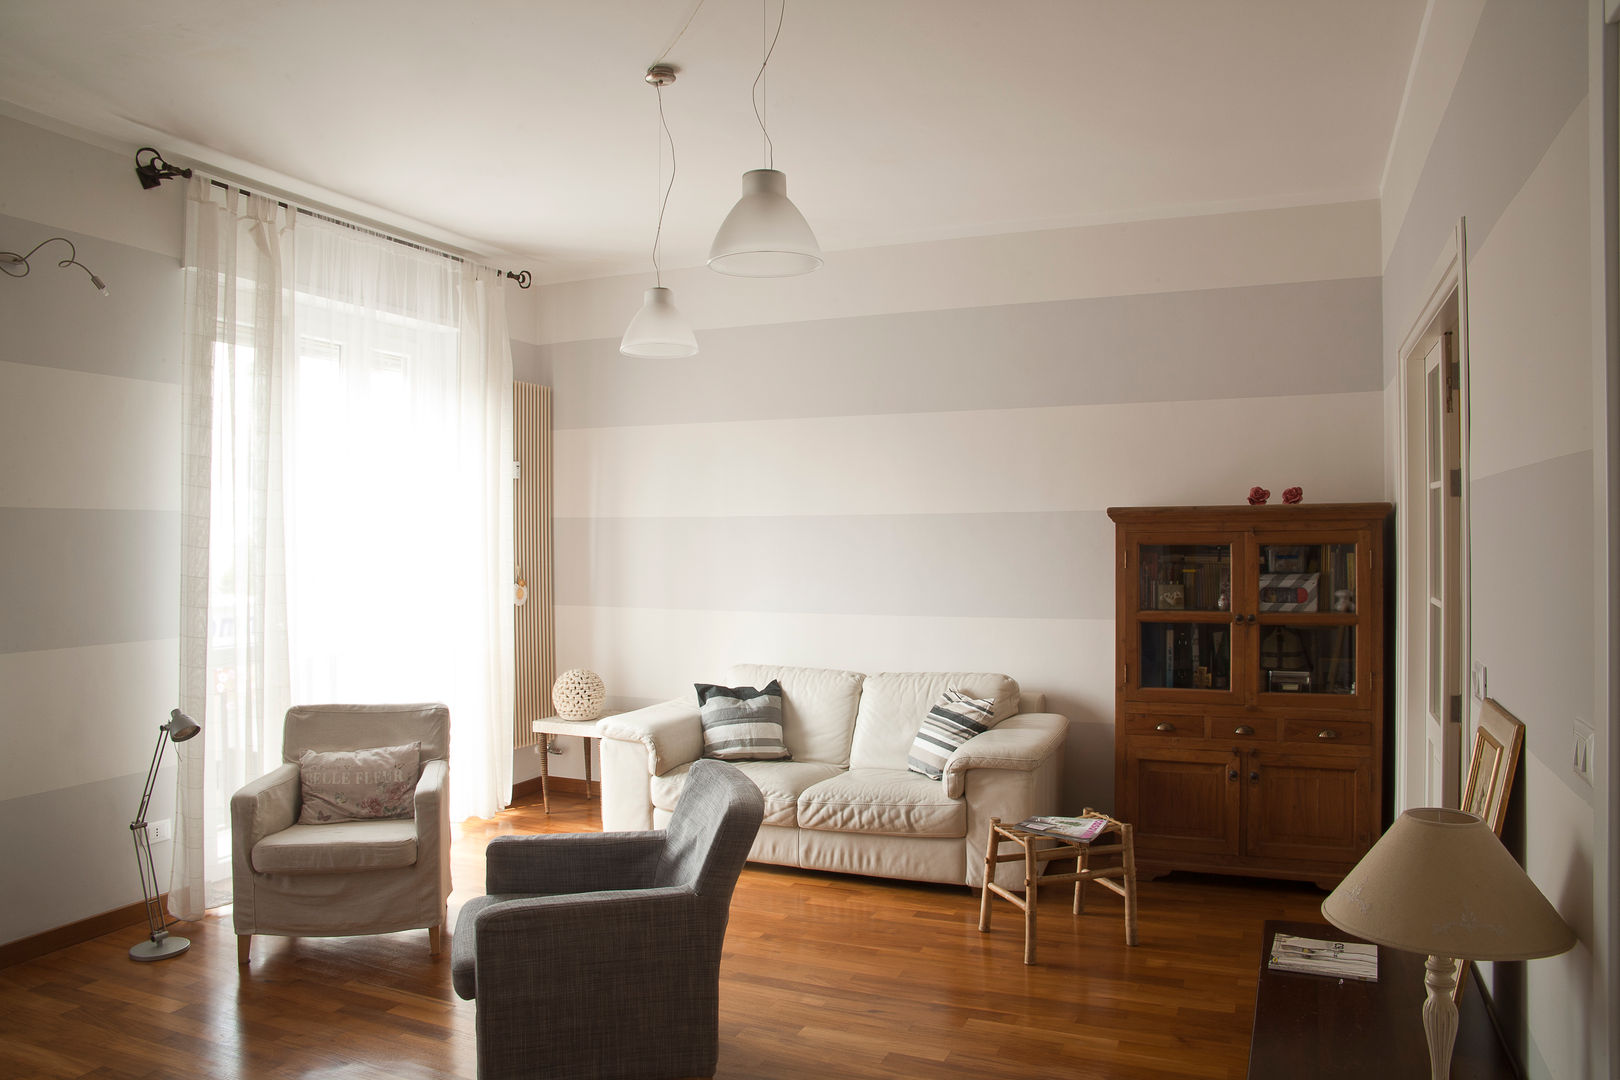 _Mondrian Home_, Alessandro Multari Ingegnere - I AM puro ingegno italiano Alessandro Multari Ingegnere - I AM puro ingegno italiano Living room